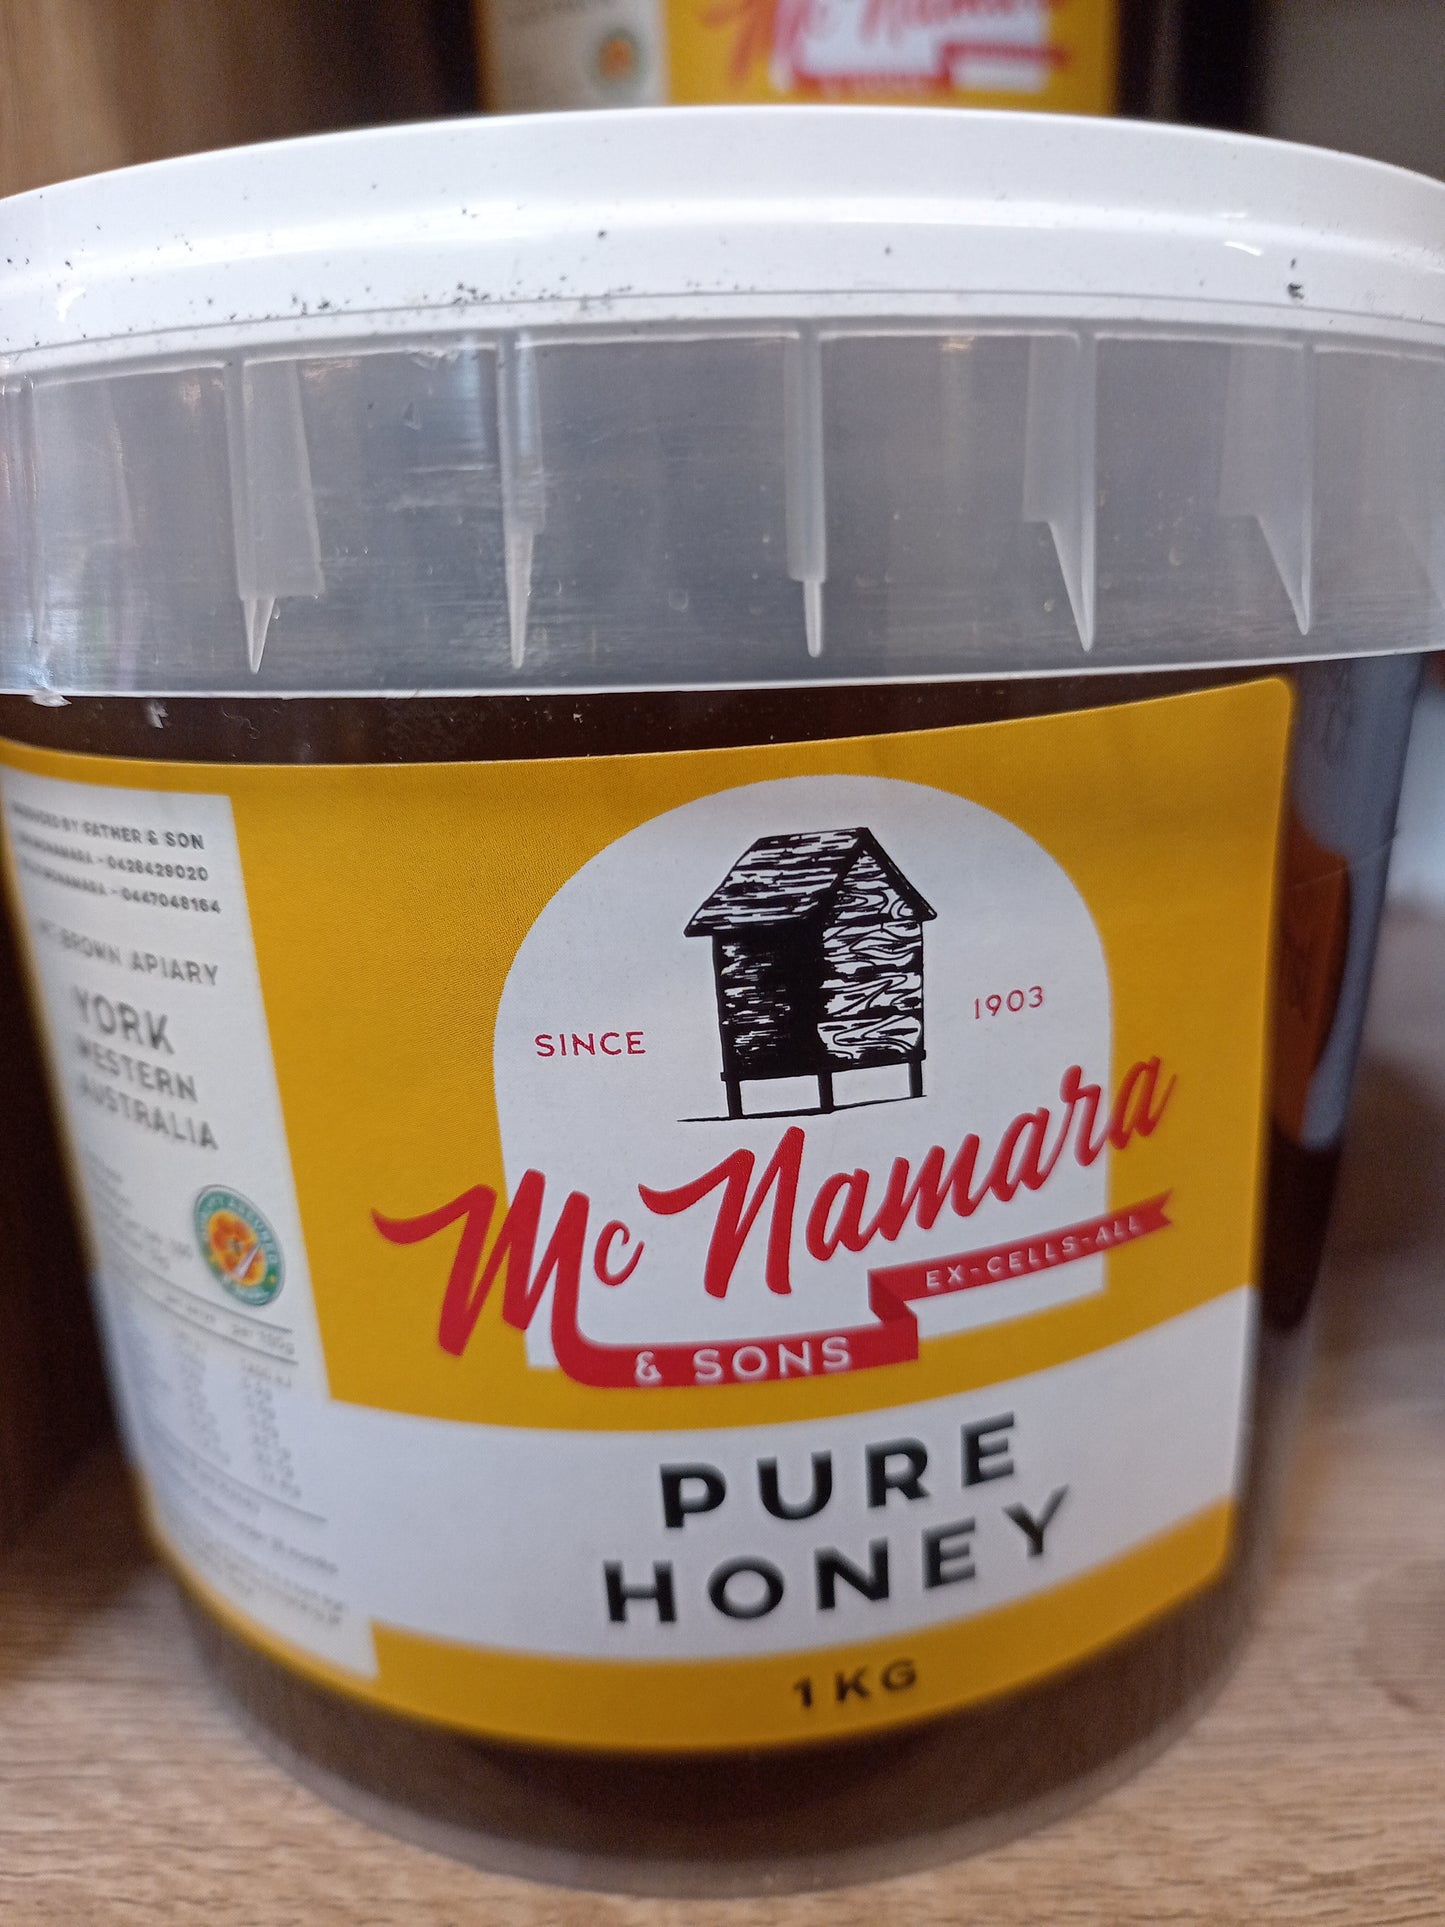 Honey - Local and seasonal